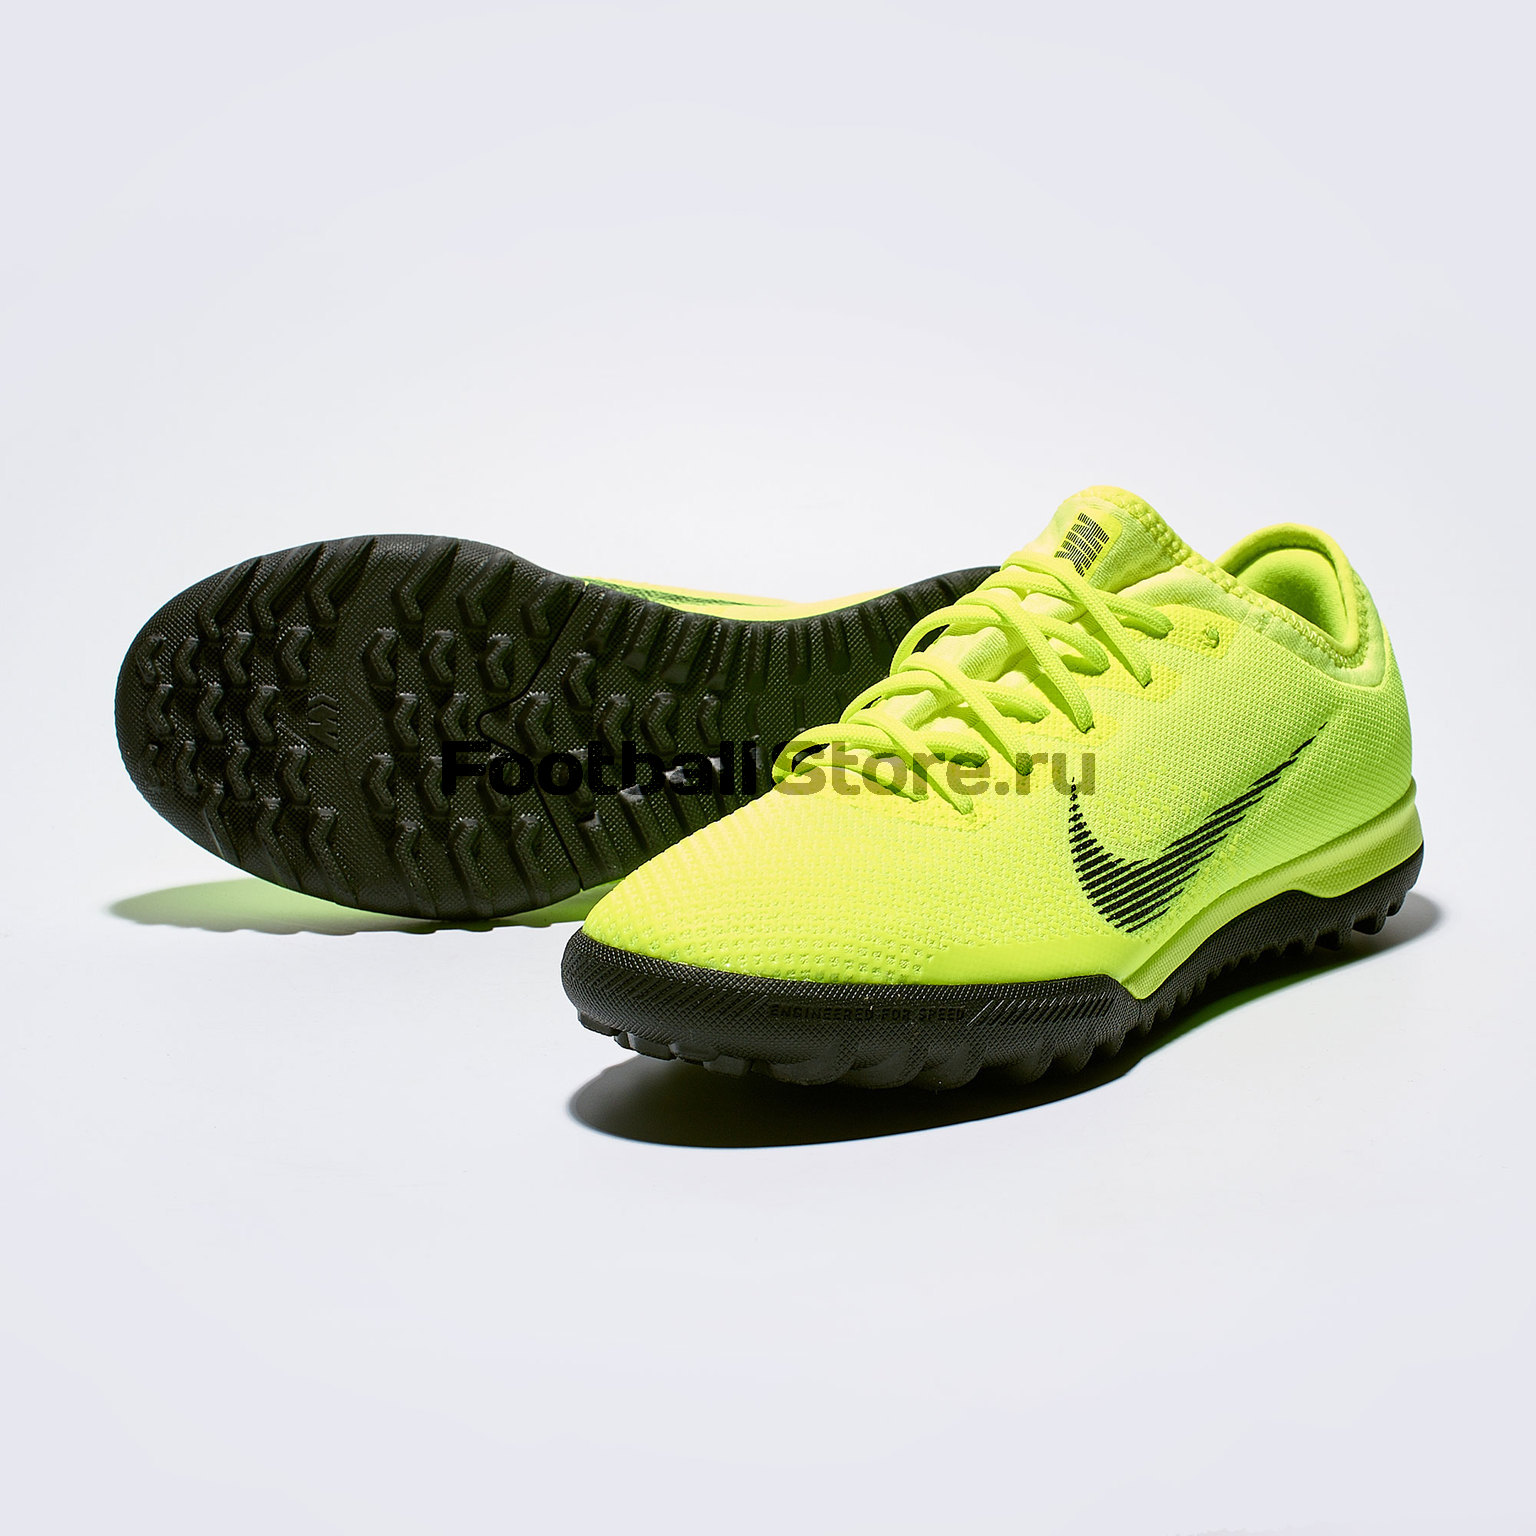 Шиповки Nike Vapor 12 Pro TF AH7388-701